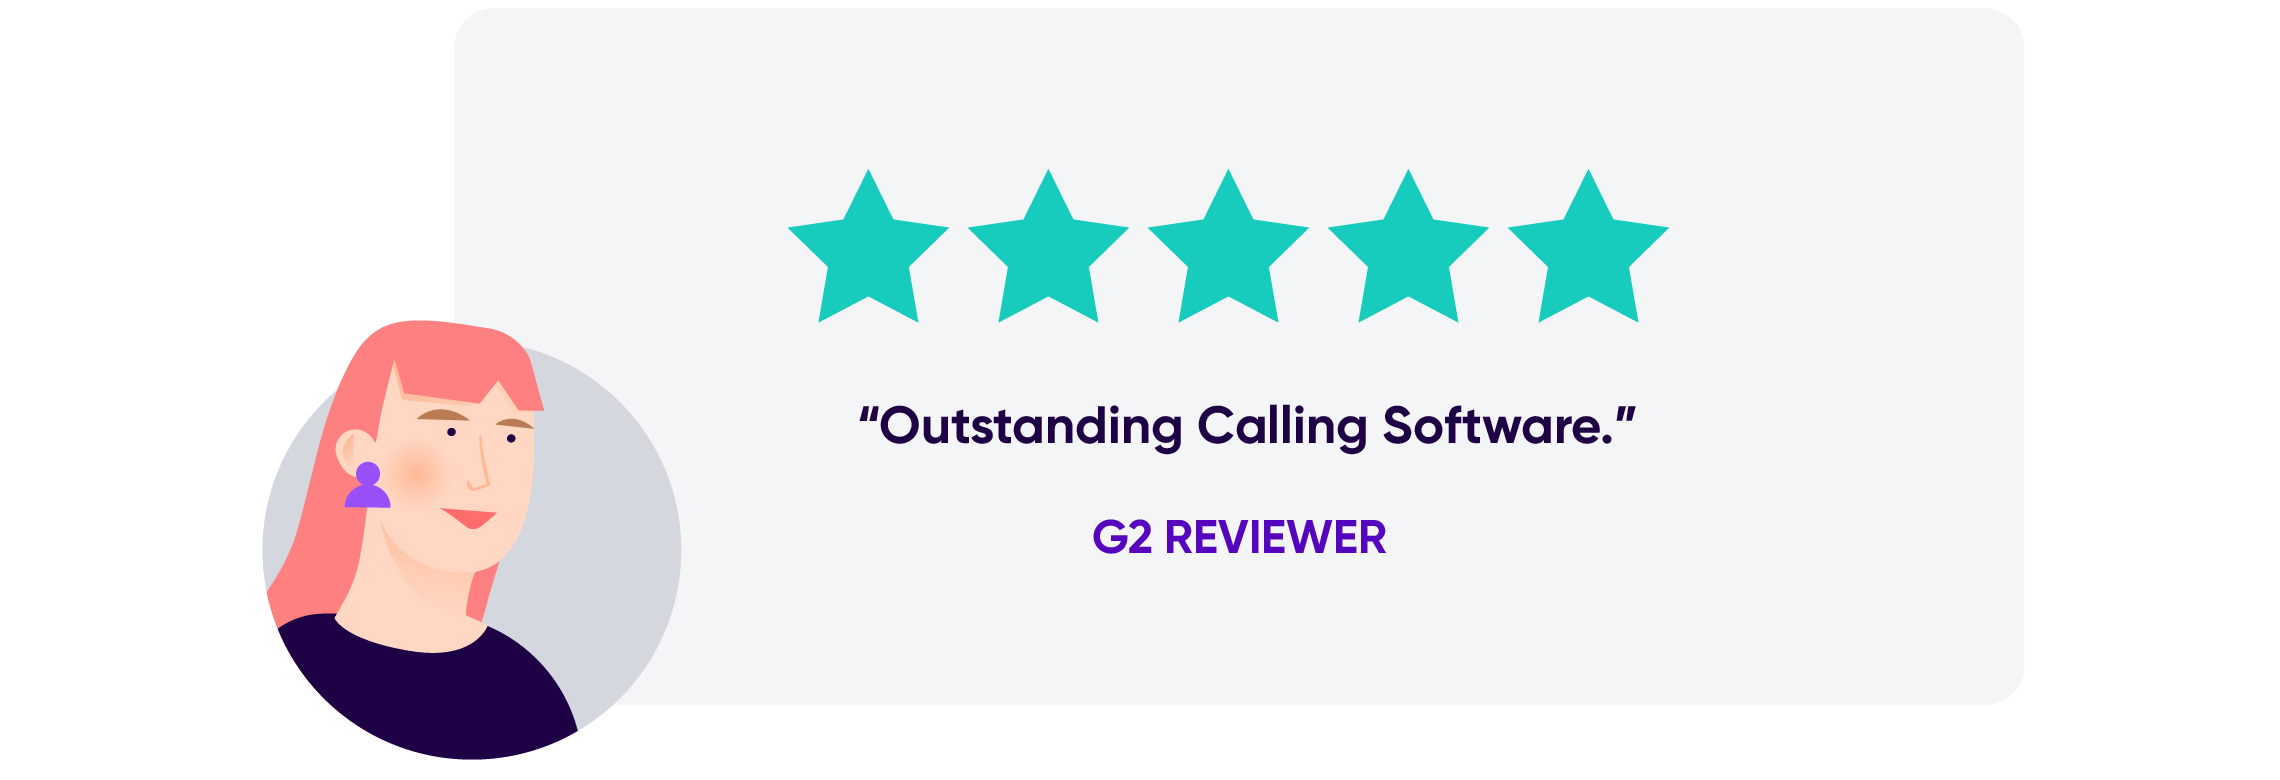 G2 Reviewer